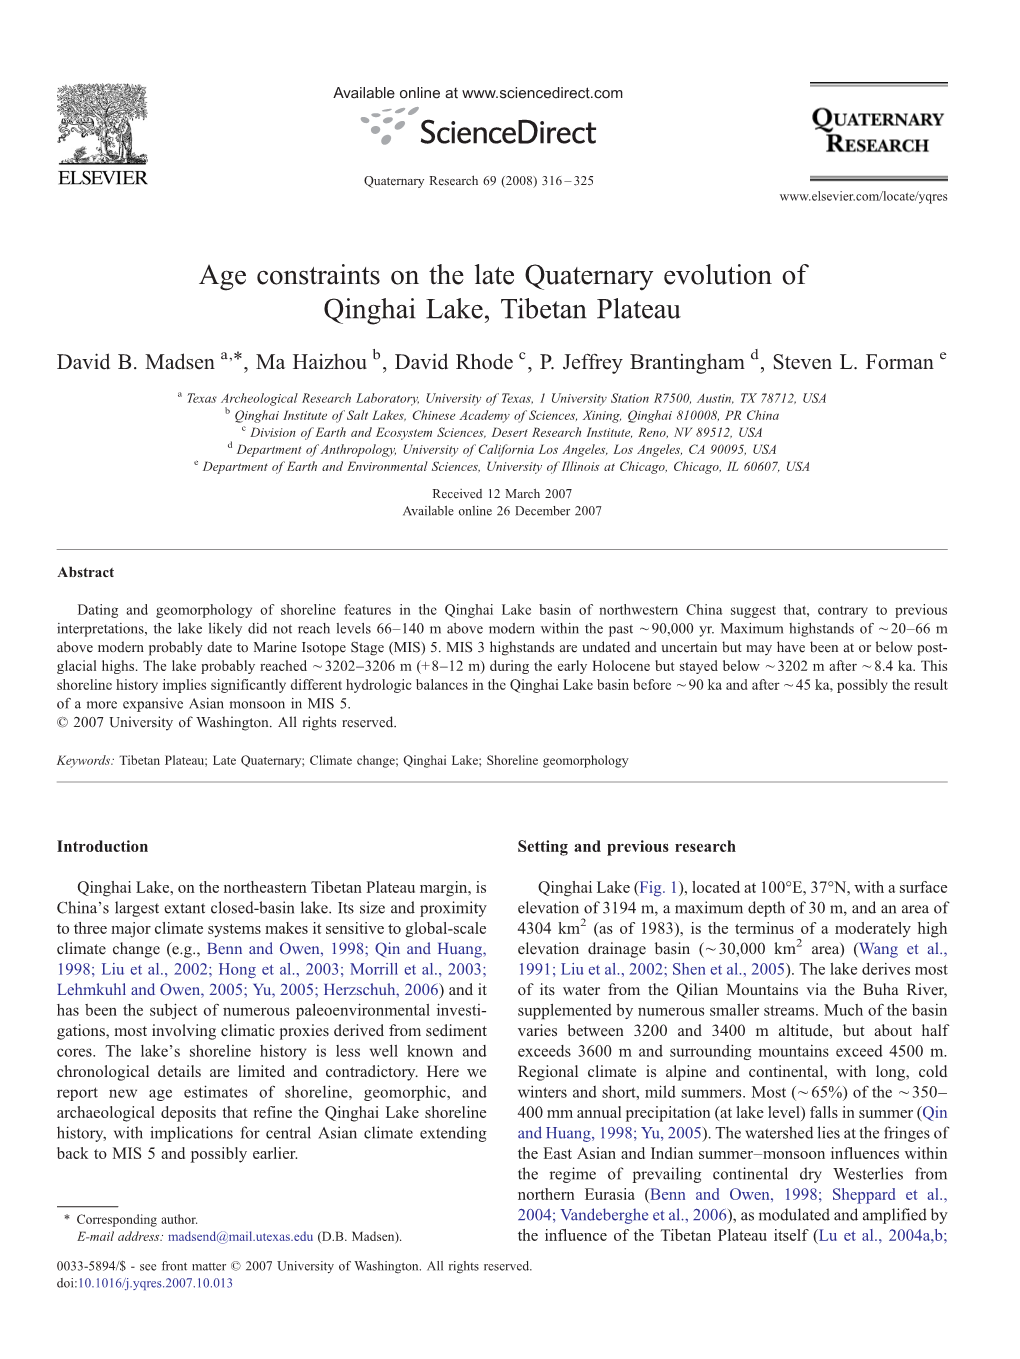 Age Constraints on the Late Quaternary Evolution of Qinghai Lake, Tibetan Plateau ⁎ David B